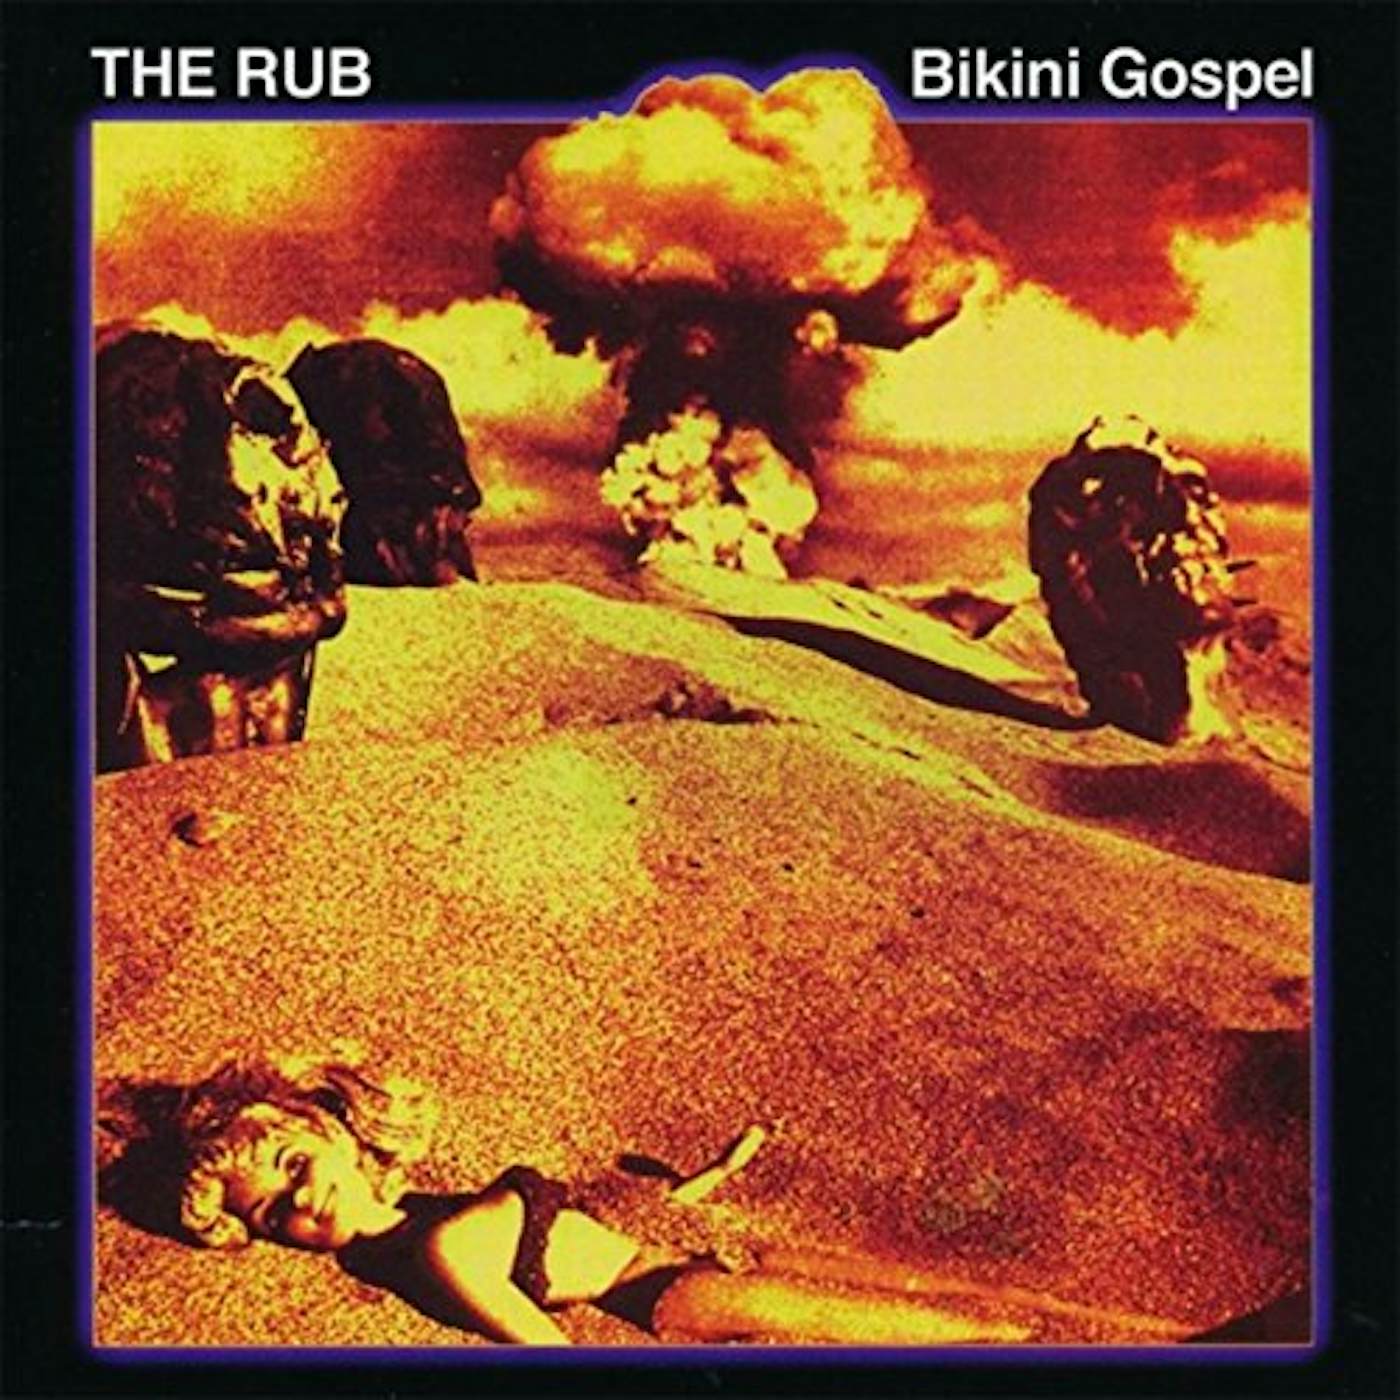 The Rub BIKINI GOSPEL CD